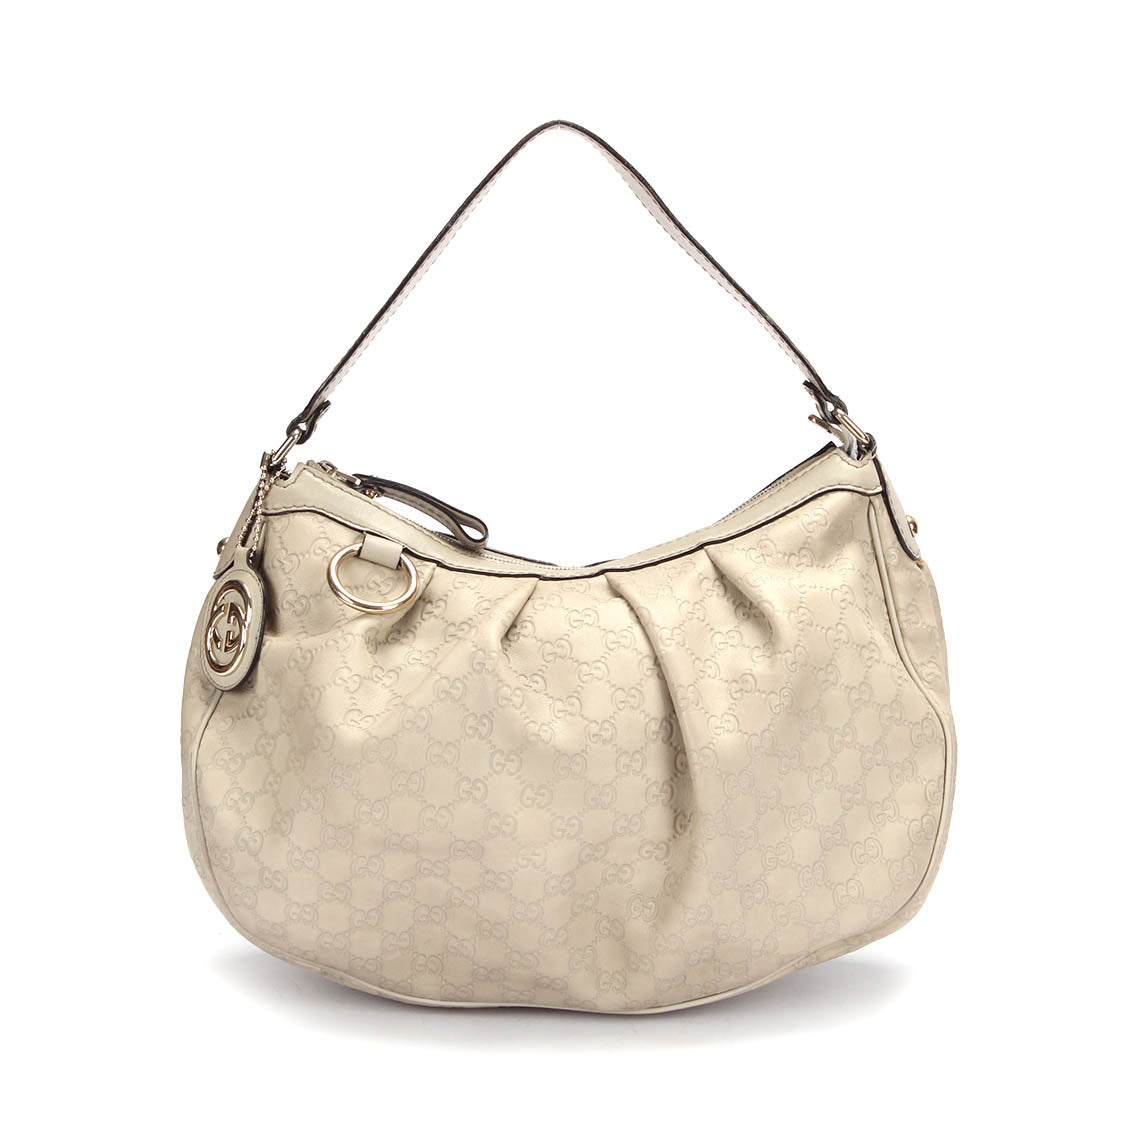 Gucci Guccissima Sukey Shoulder Bag Leather Shoulder Bag 232955 in Fair condition